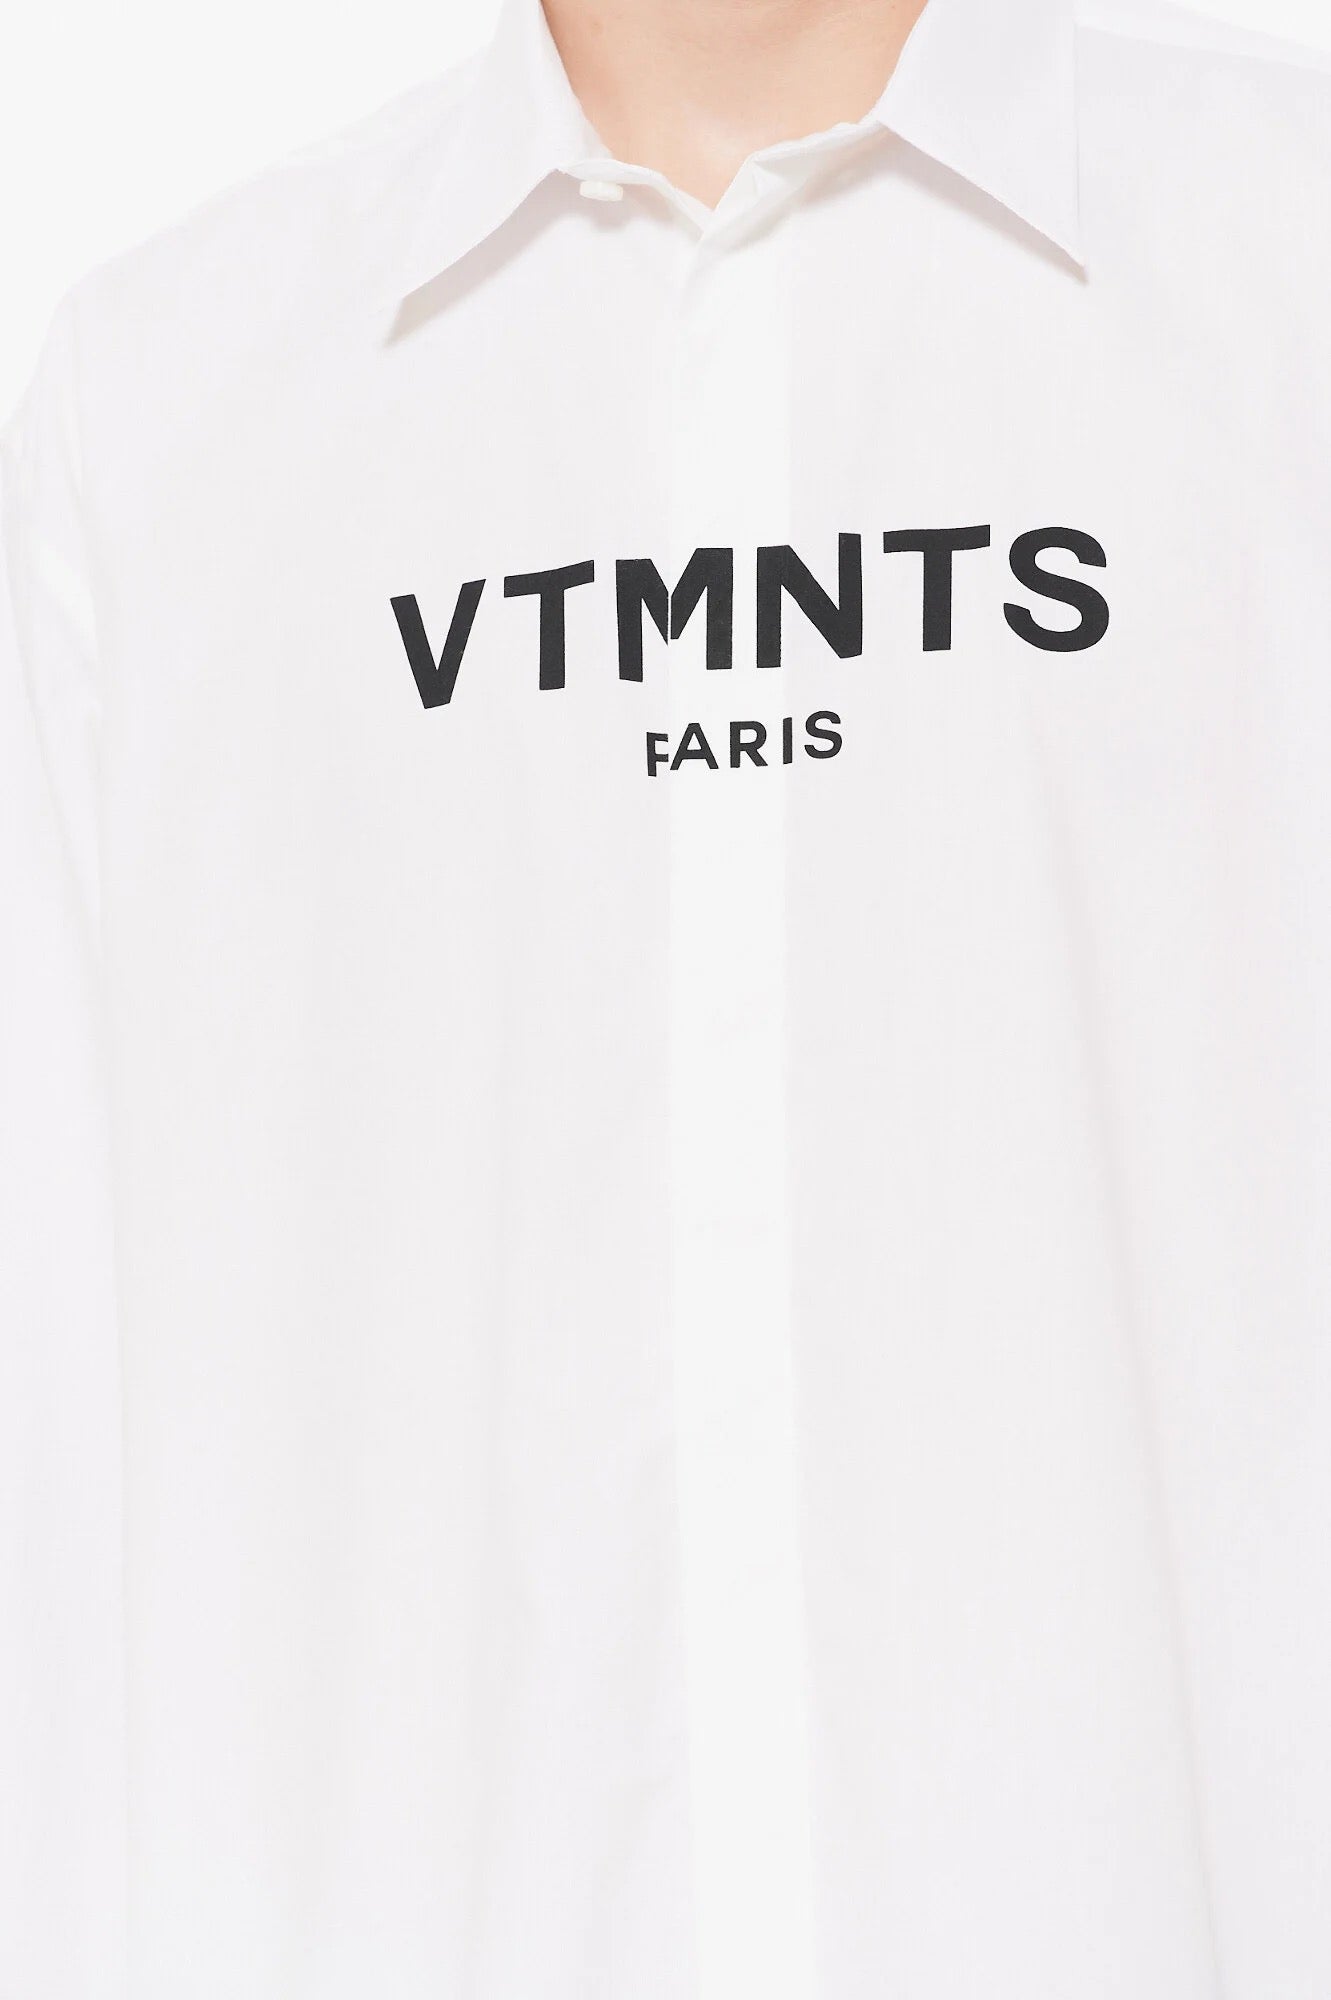 WHITE BLACK VTMNTS PARIS LOGO SHIRT